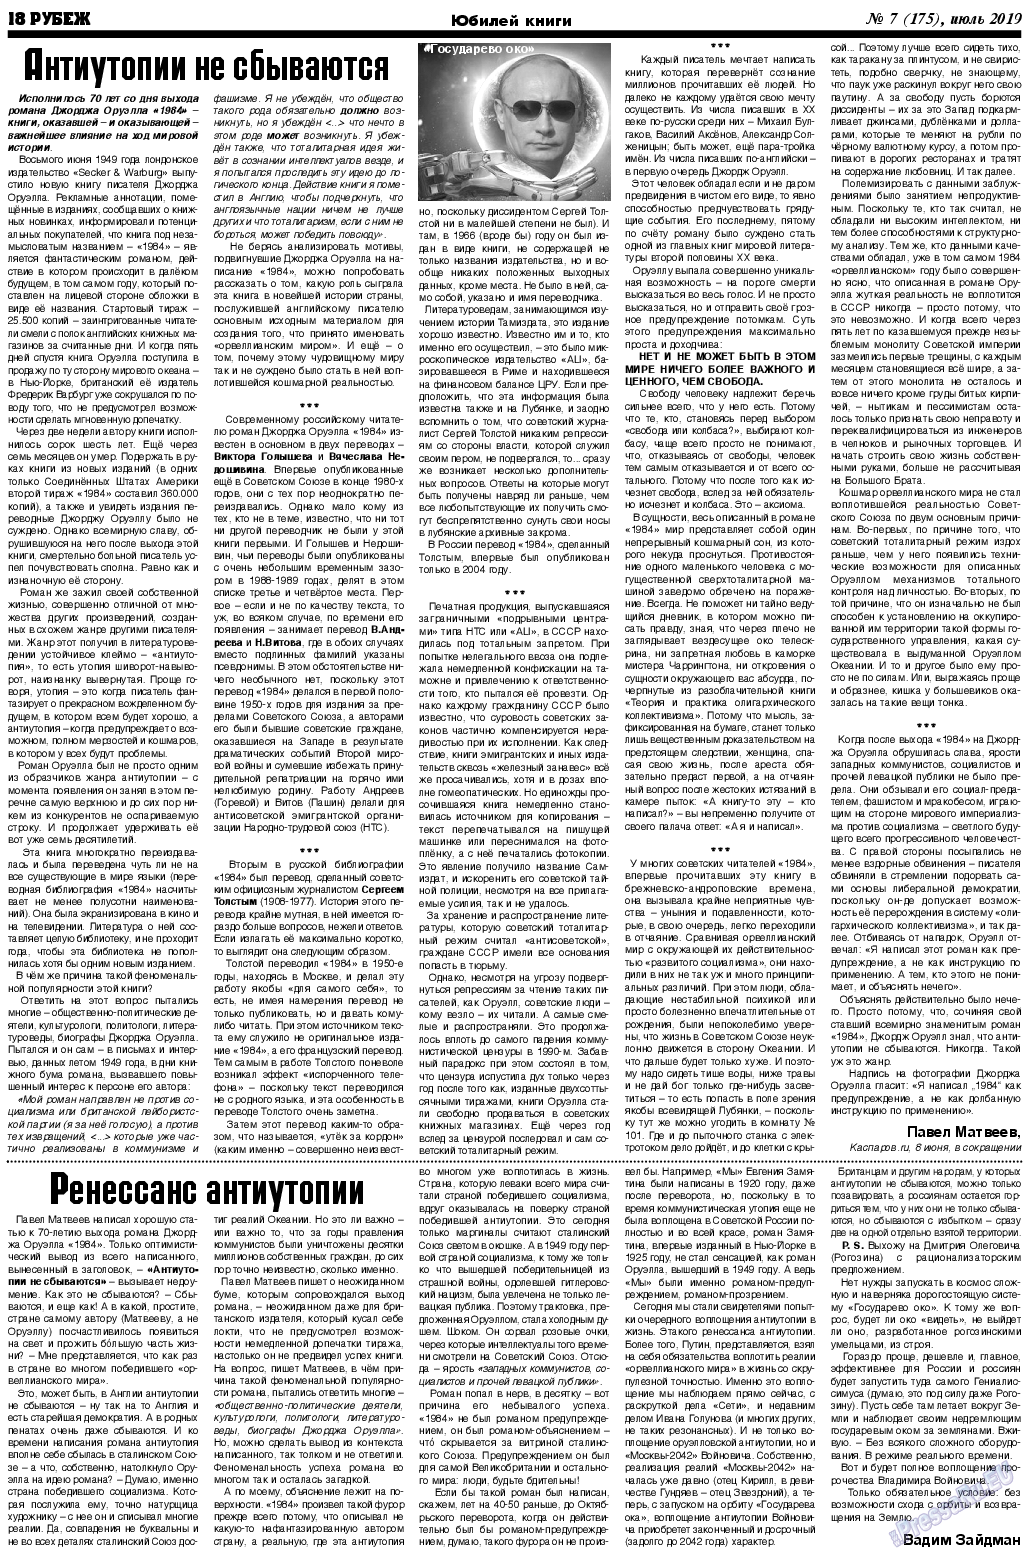 Рубеж, газета. 2019 №7 стр.18